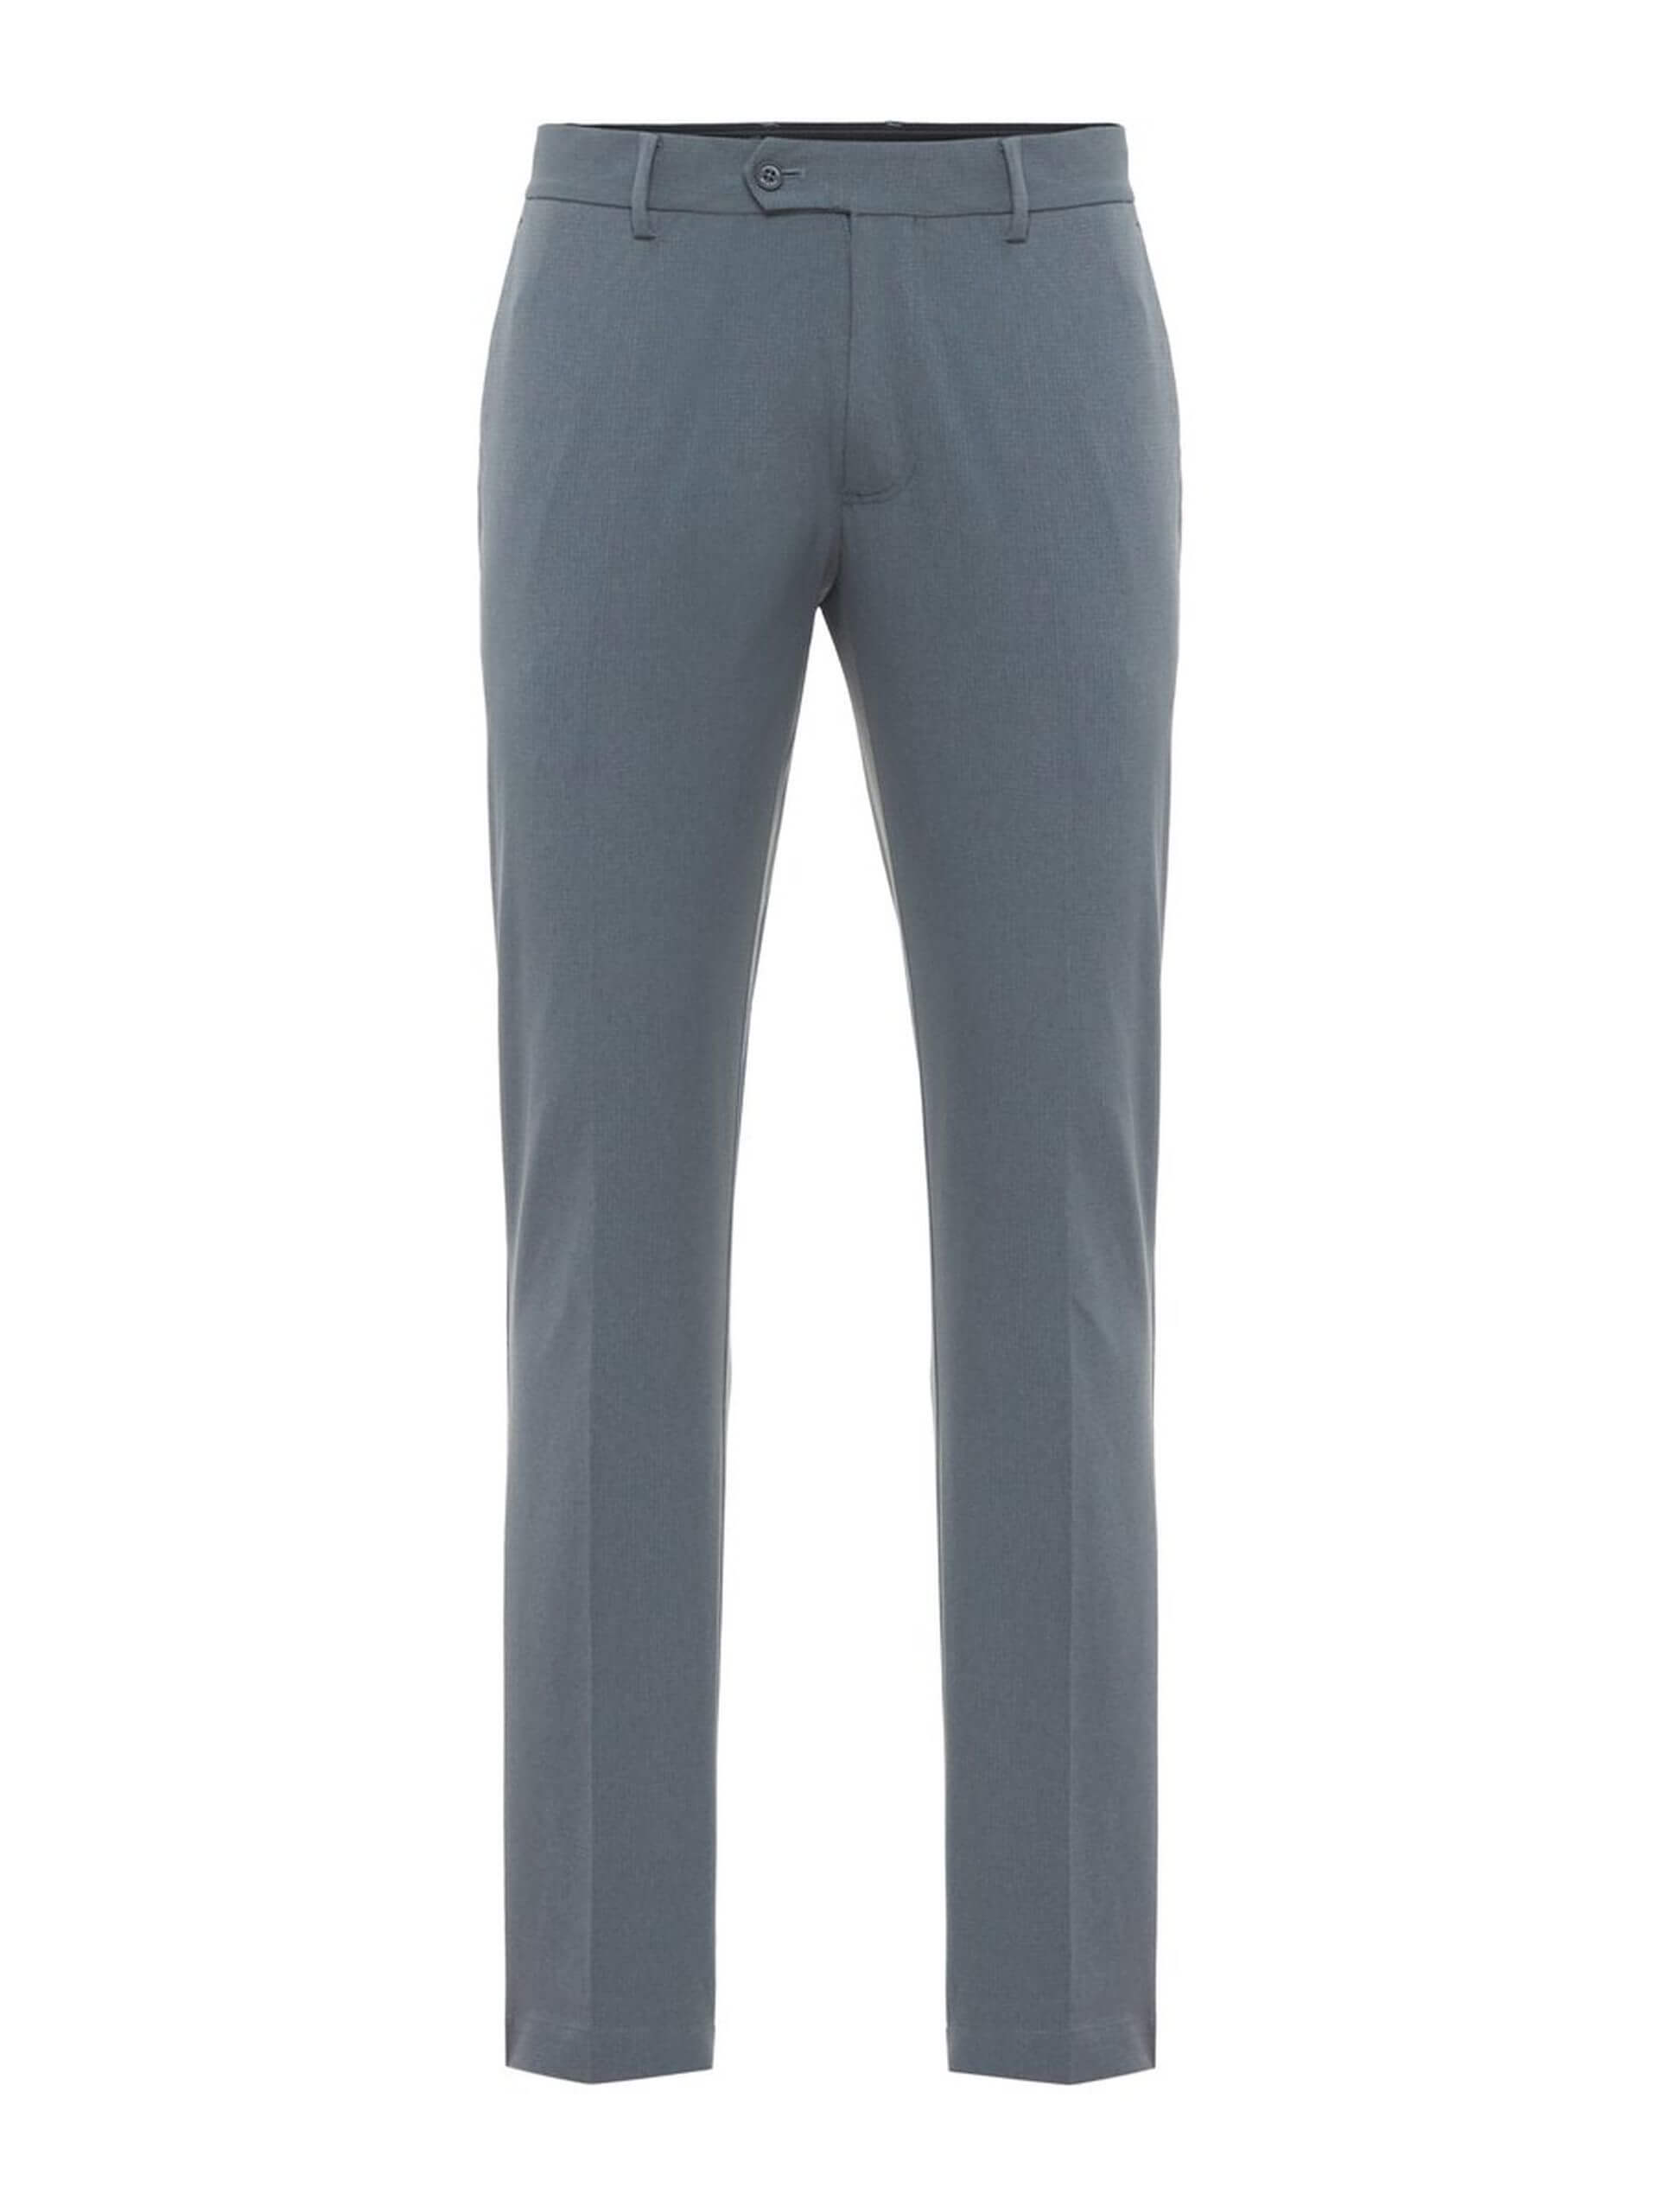 Dark Grey Vent Tight Fit Classic Golf Trousers - Men